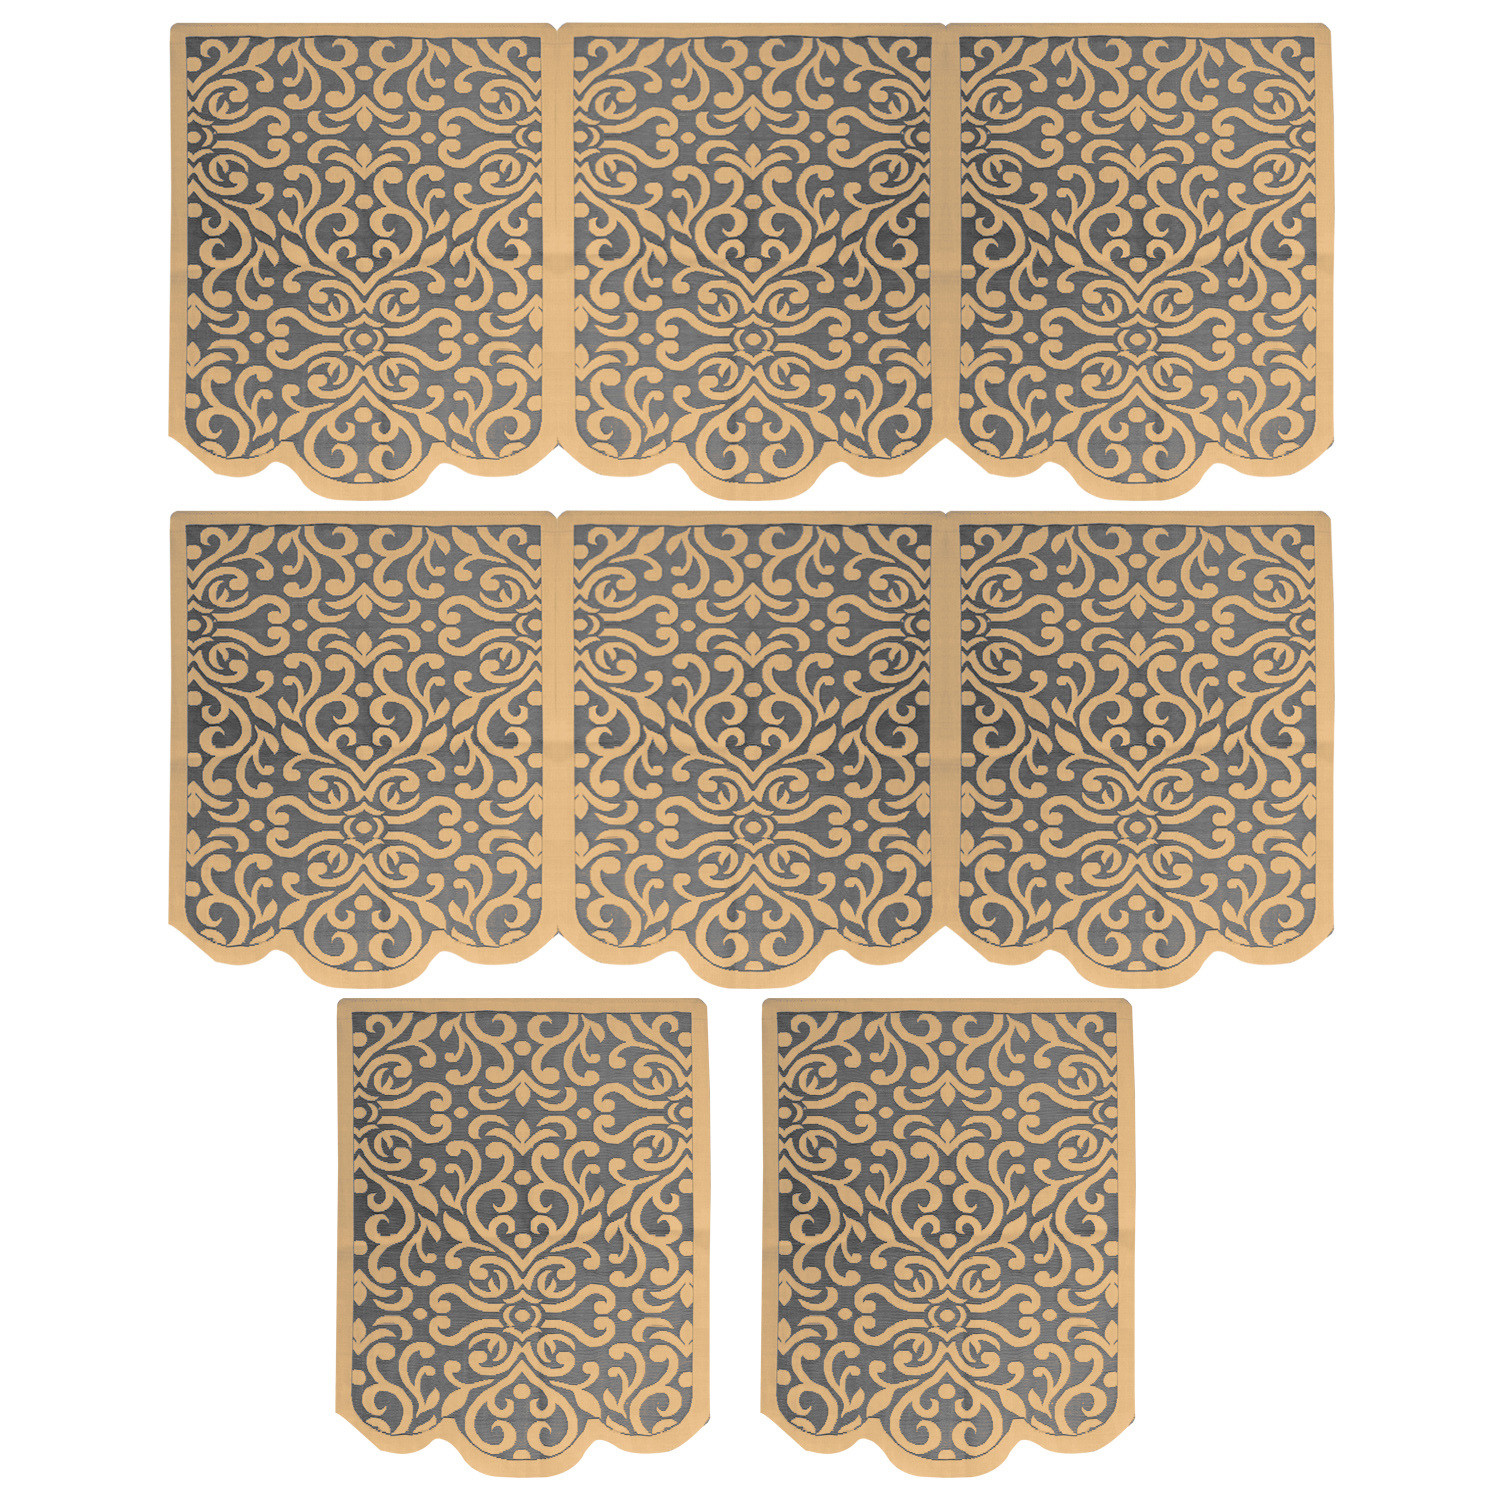 Kuber Industries Artcam Design 5 Seater Cotton Sofa Cover Set (Golden)